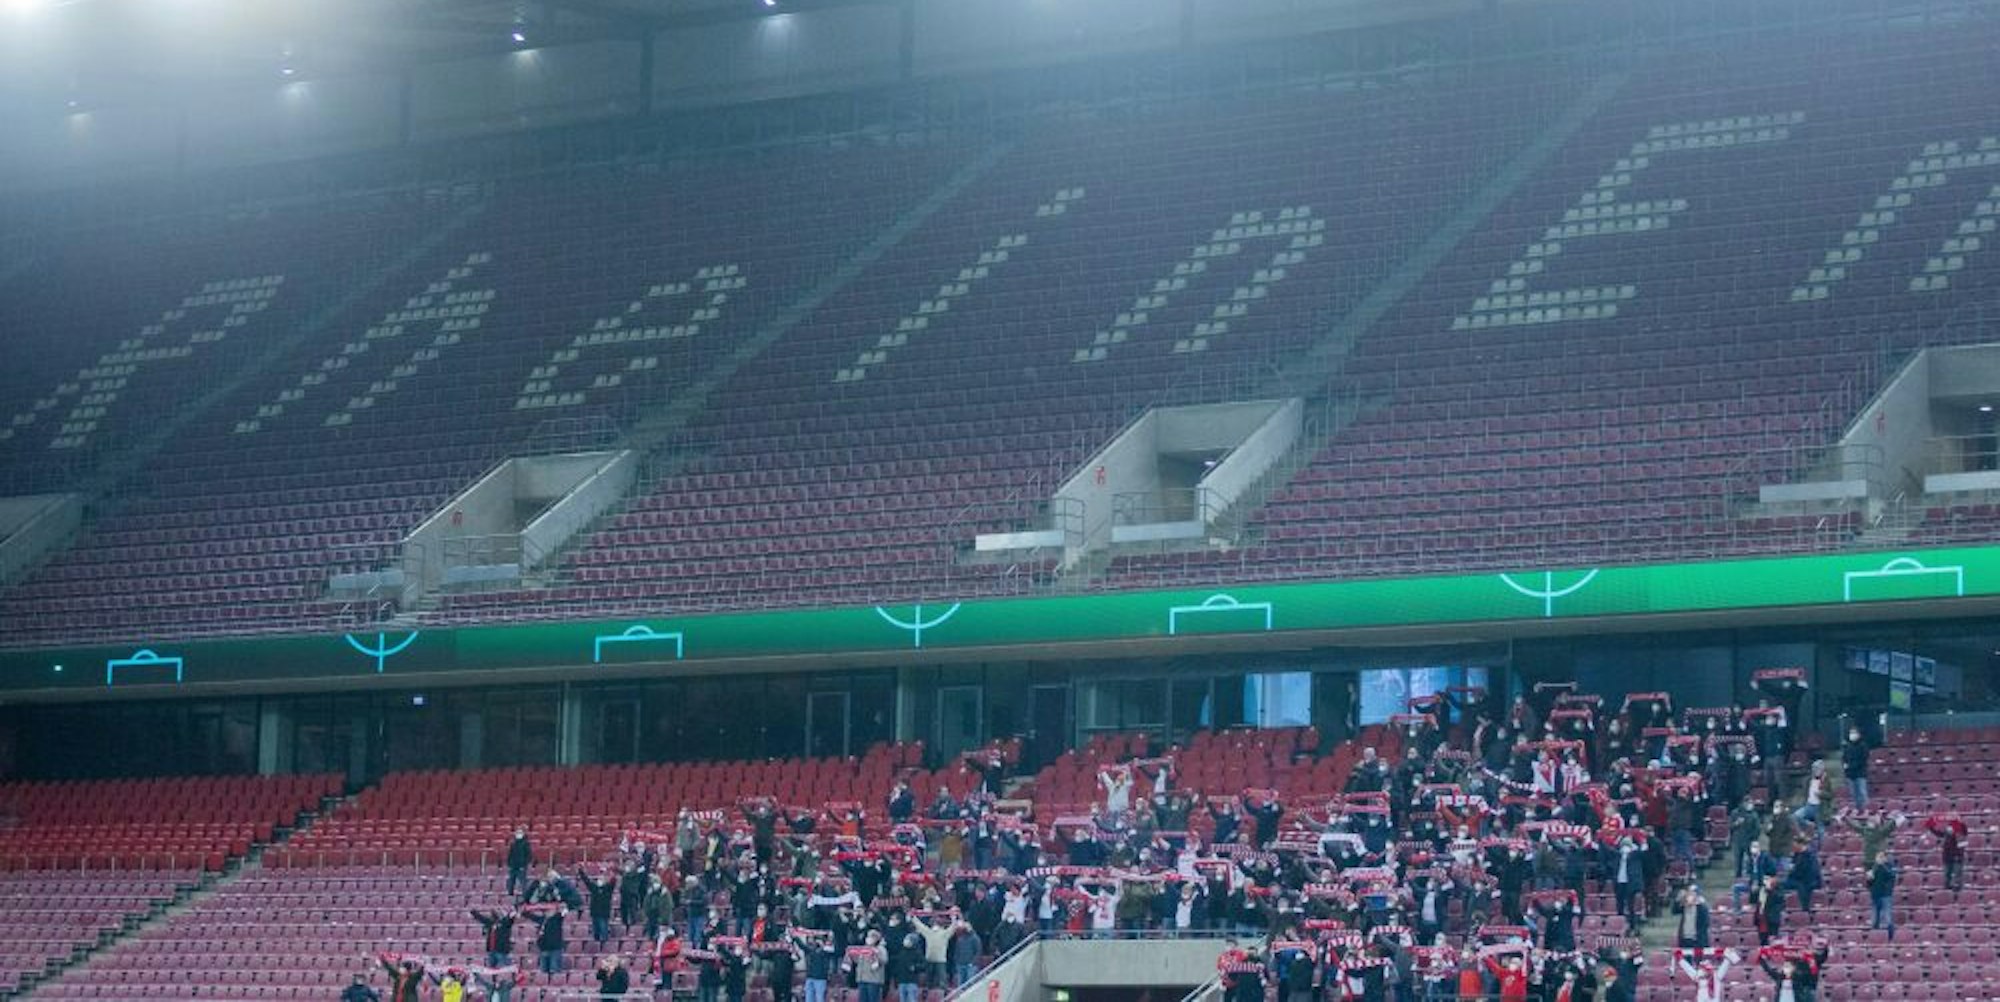 Leere Sitze im Stadion. (Archivbild)